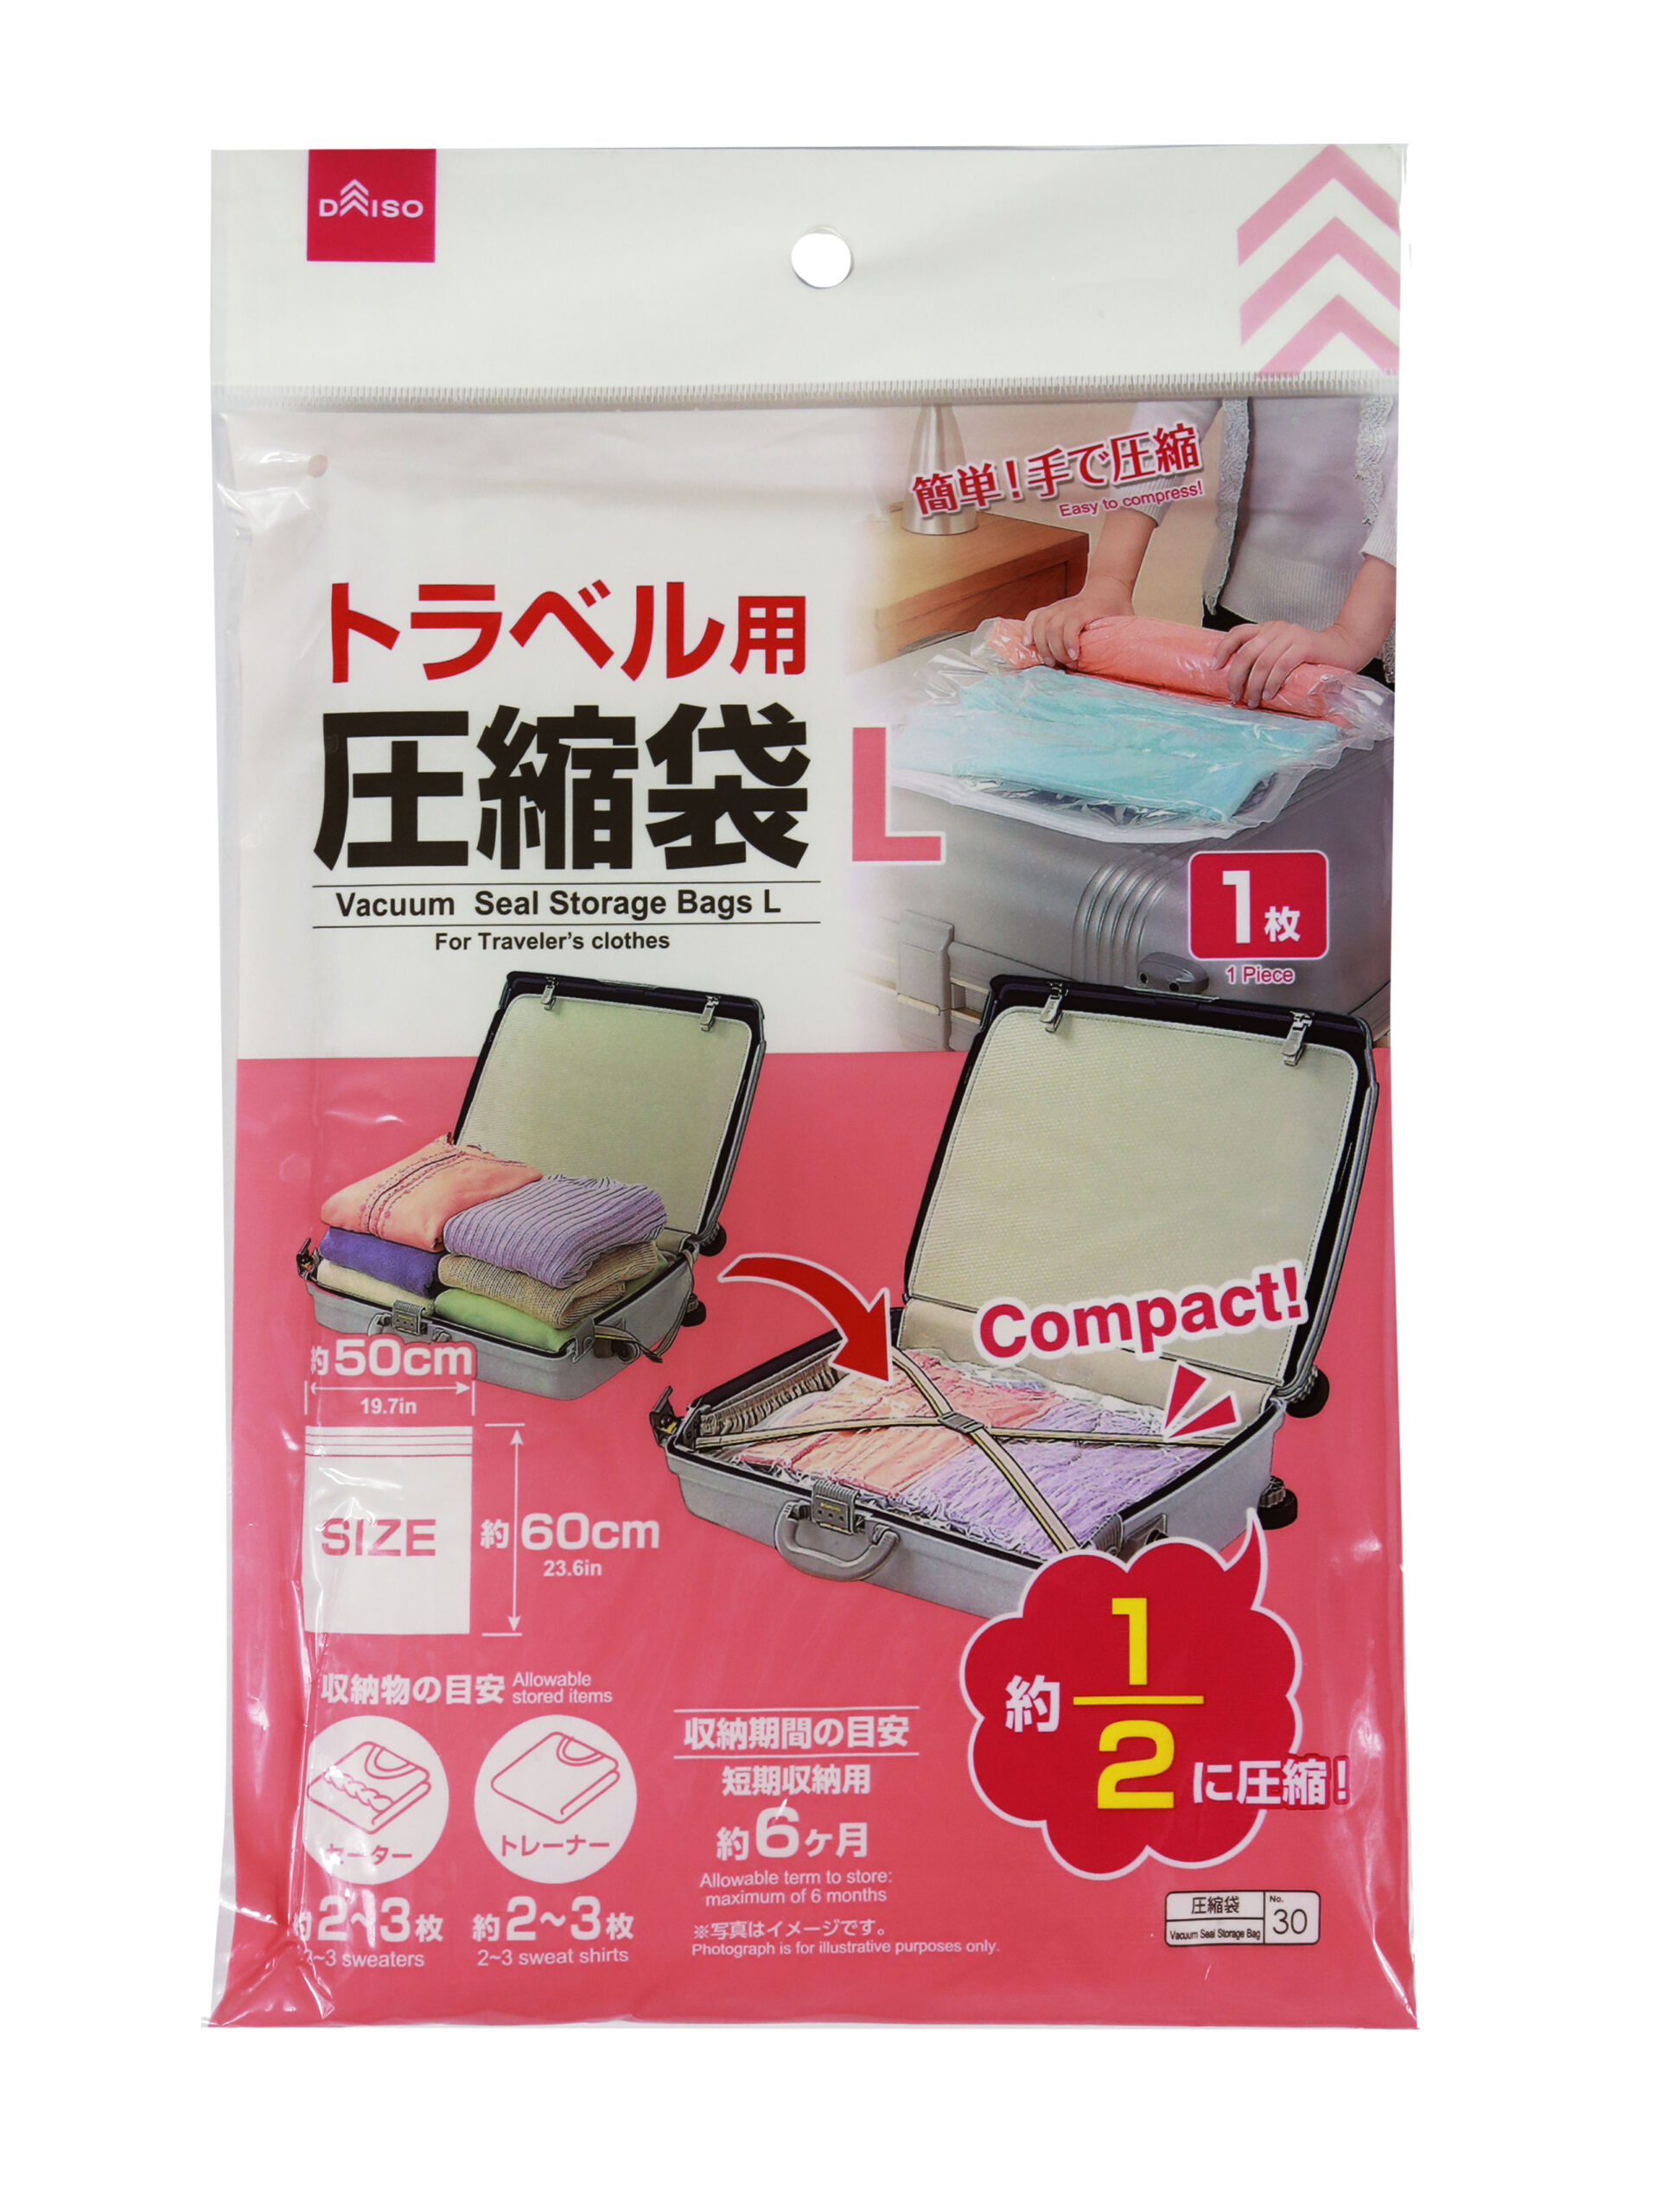 Zielig of Menselijk ras Travel Vacuum Seal Storage Bags - Size L - Daiso Japan Middle East